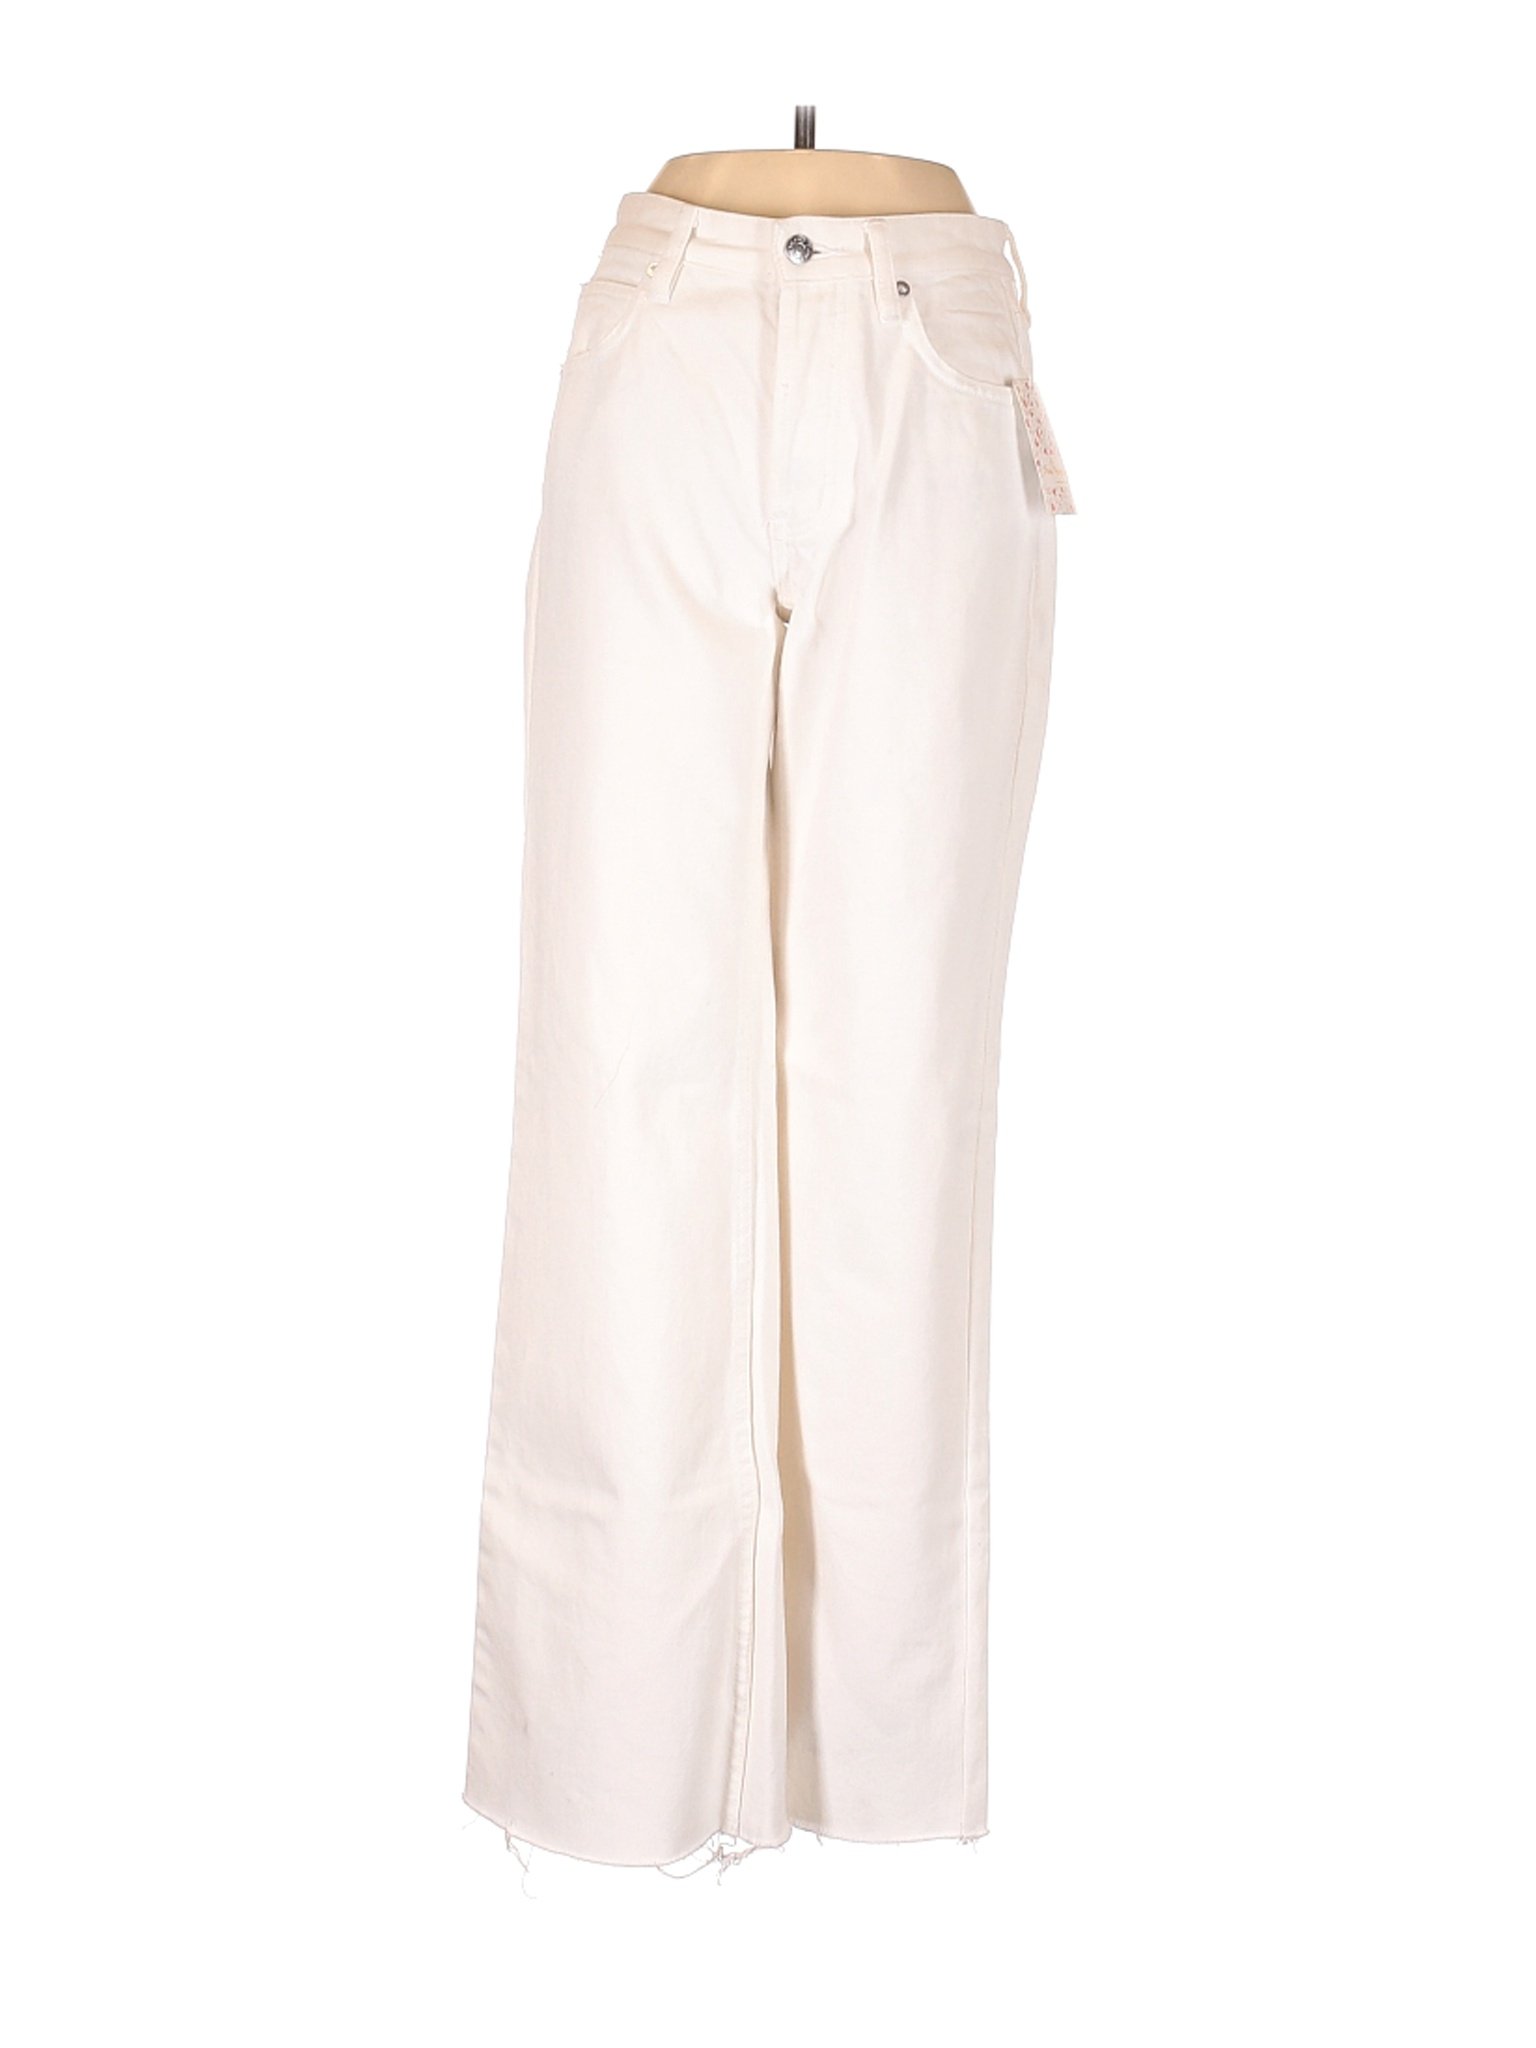 NWT Free People Women Ivory Jeans 24W | eBay